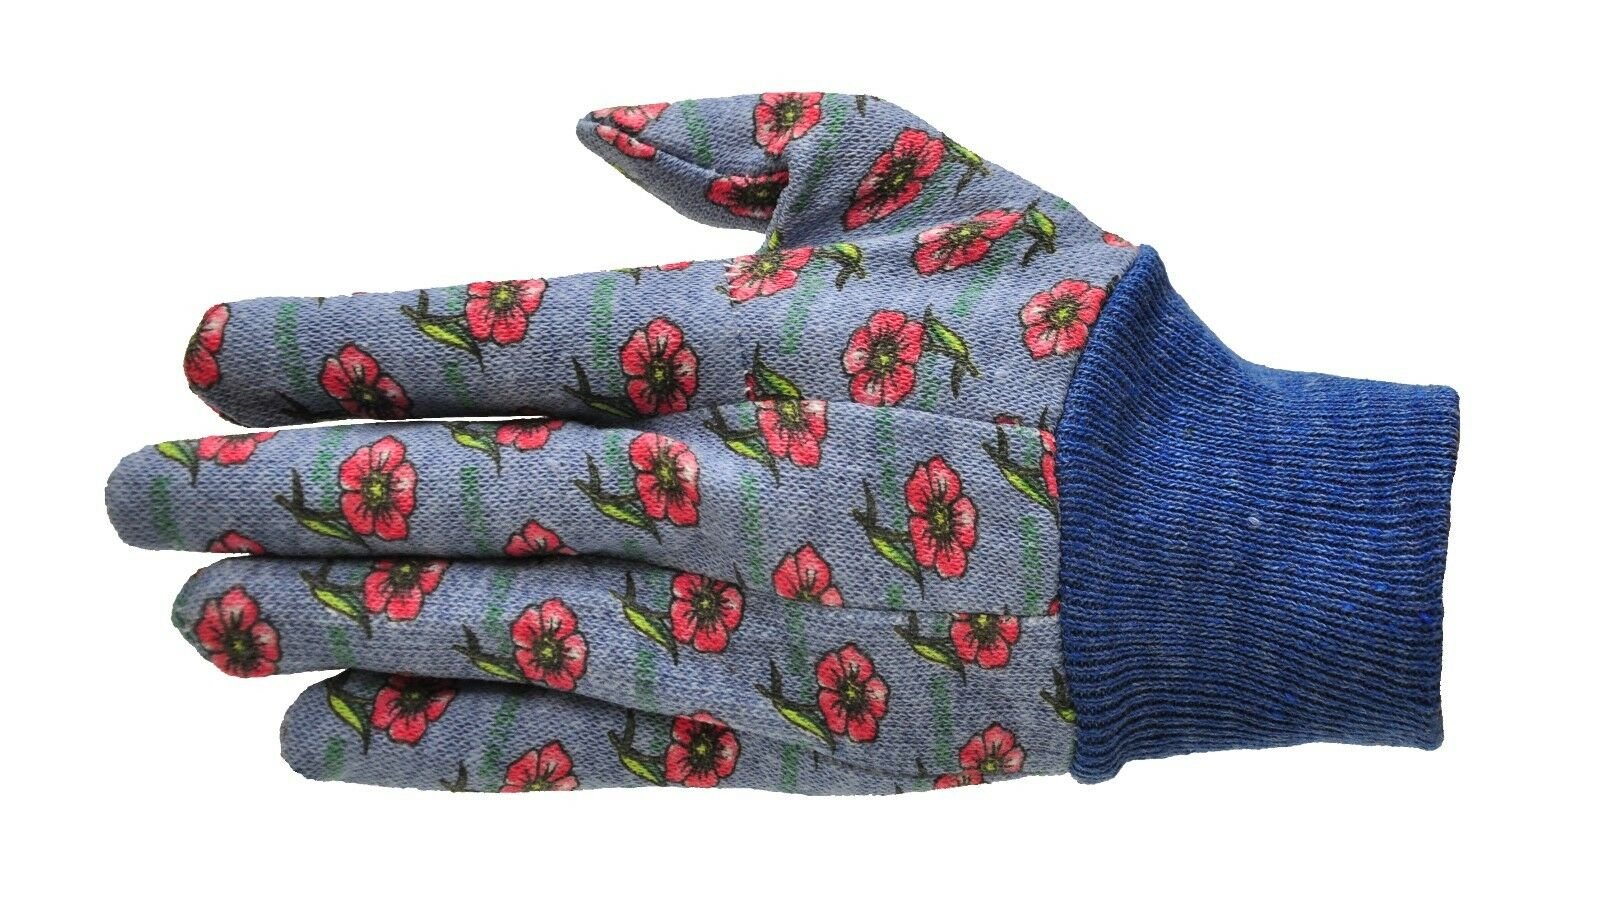 G & F Kids Garden Gloves 1823-3 JustForKids Work Gloves, 3 Pairs Green/Red/Blue per Pack - image 3 of 11